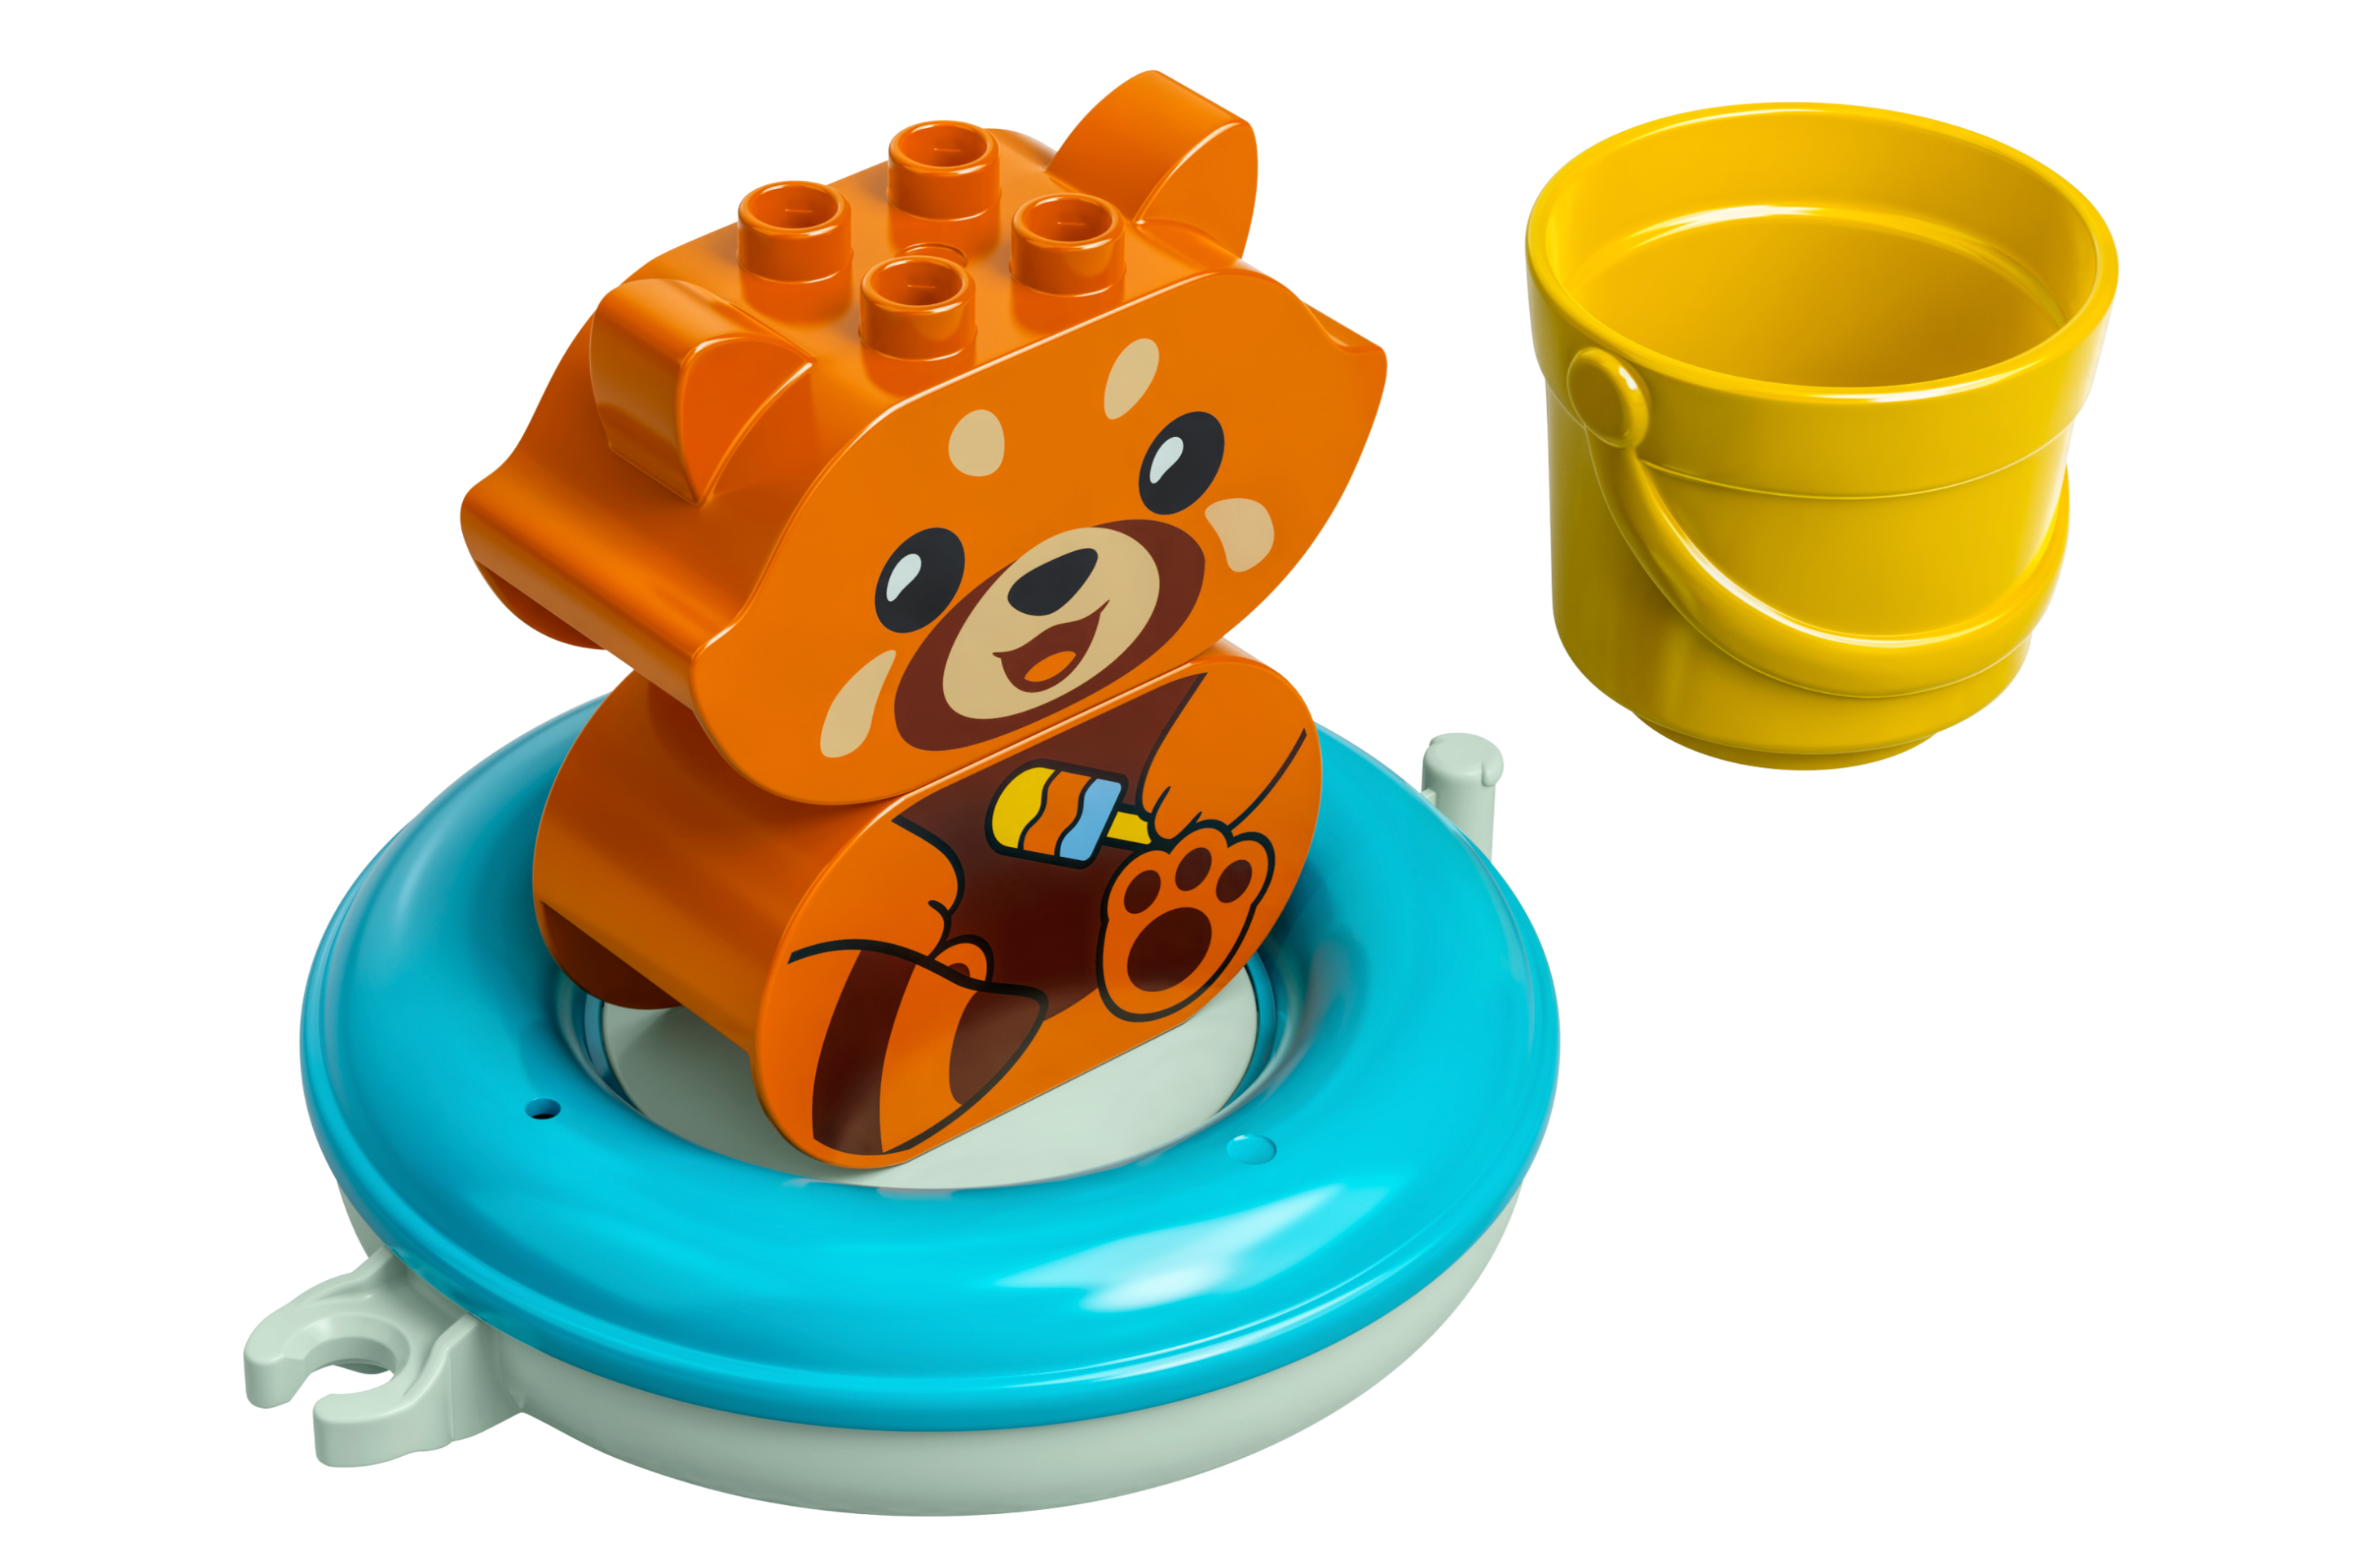 LEGO® DUPLO® My First Bath Time Fun: Floating Red Panda (10964)